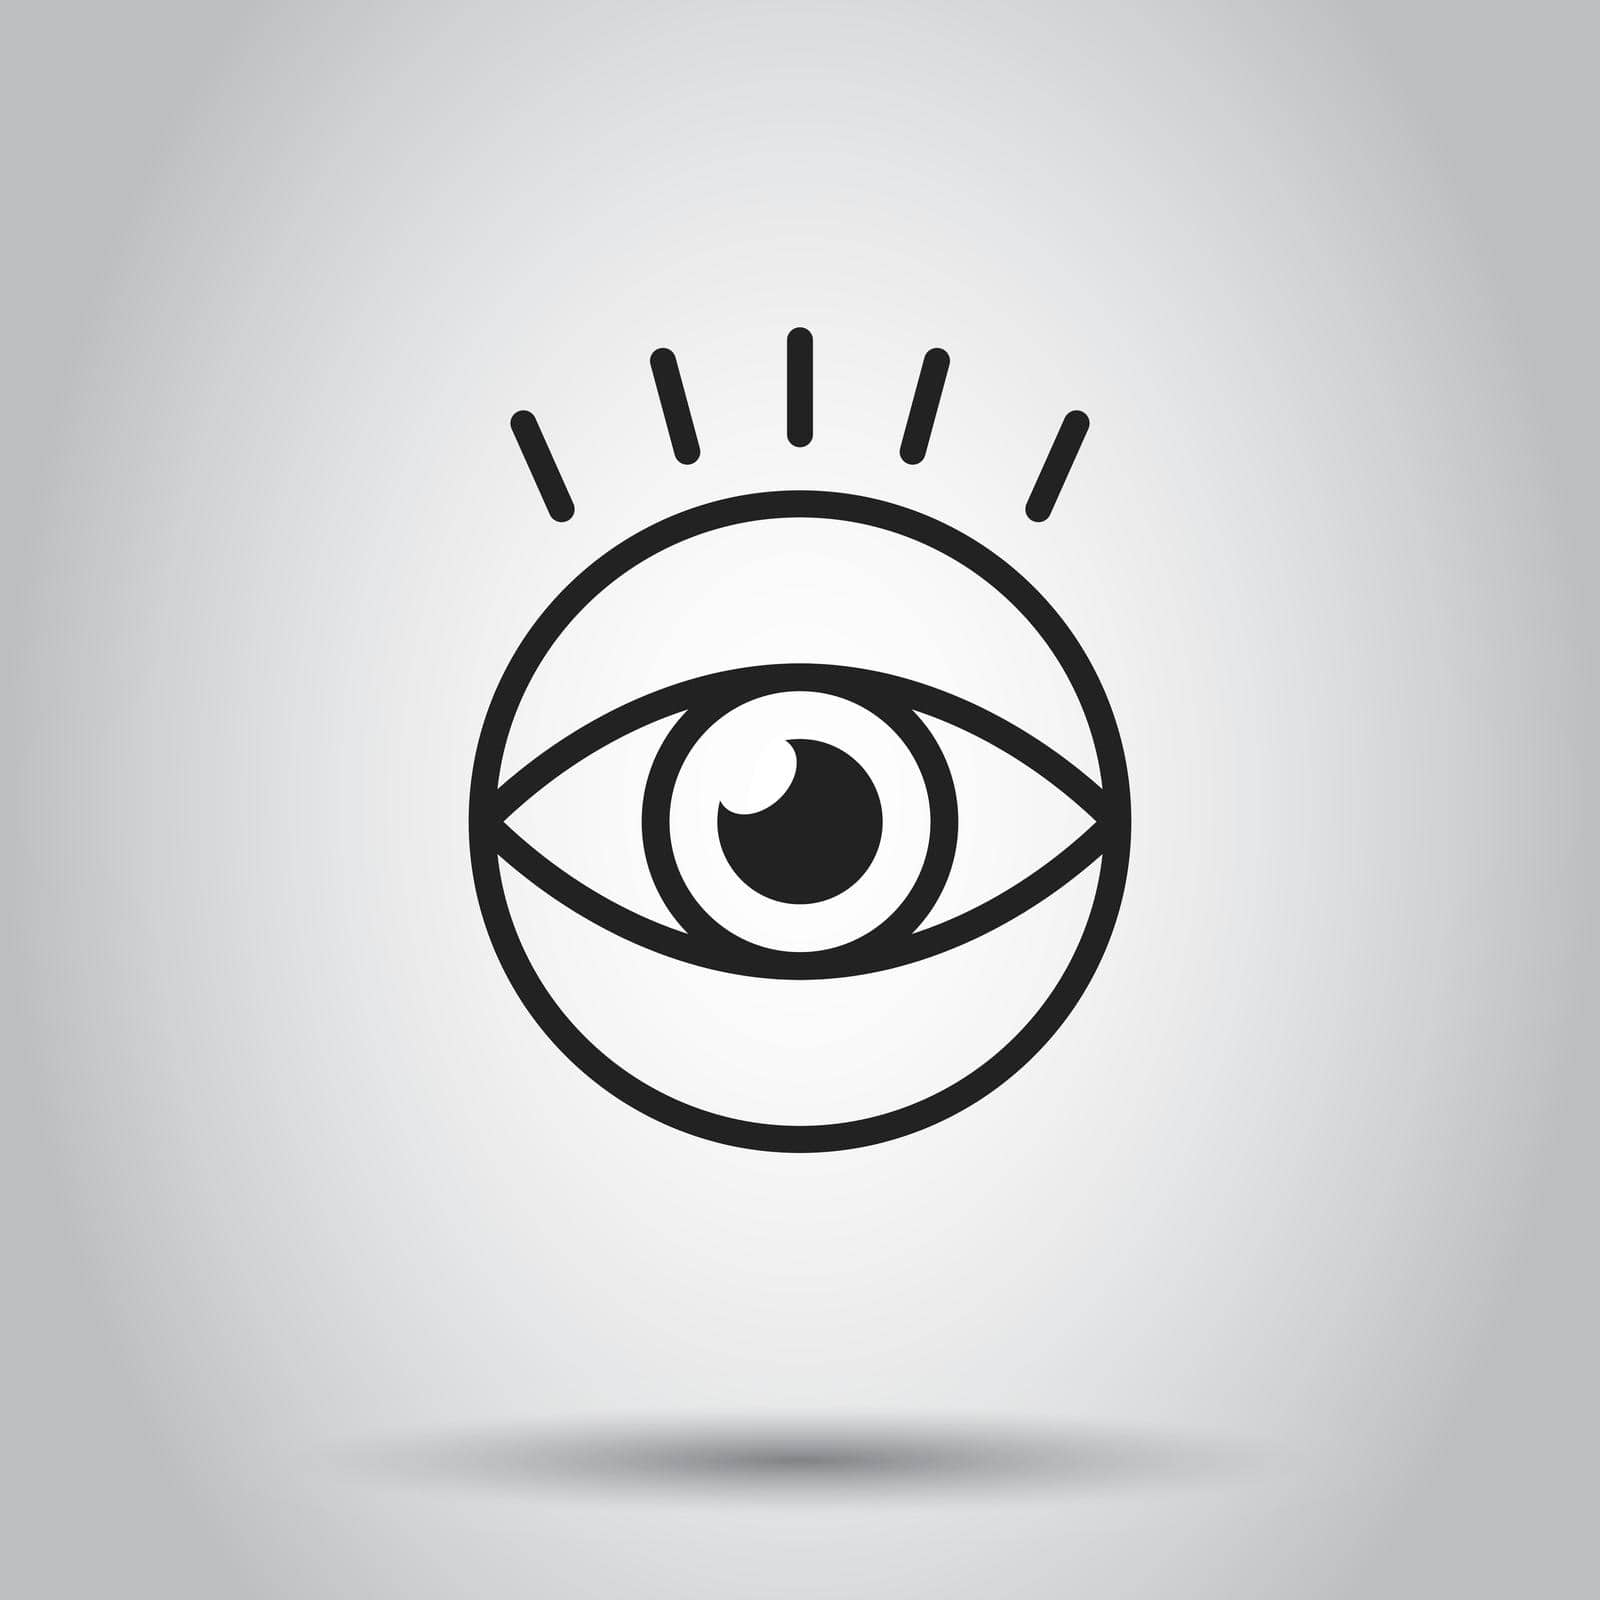 Simple eye icon. Vector illustration on isolated background. Business concept eyesight eye pictogram.